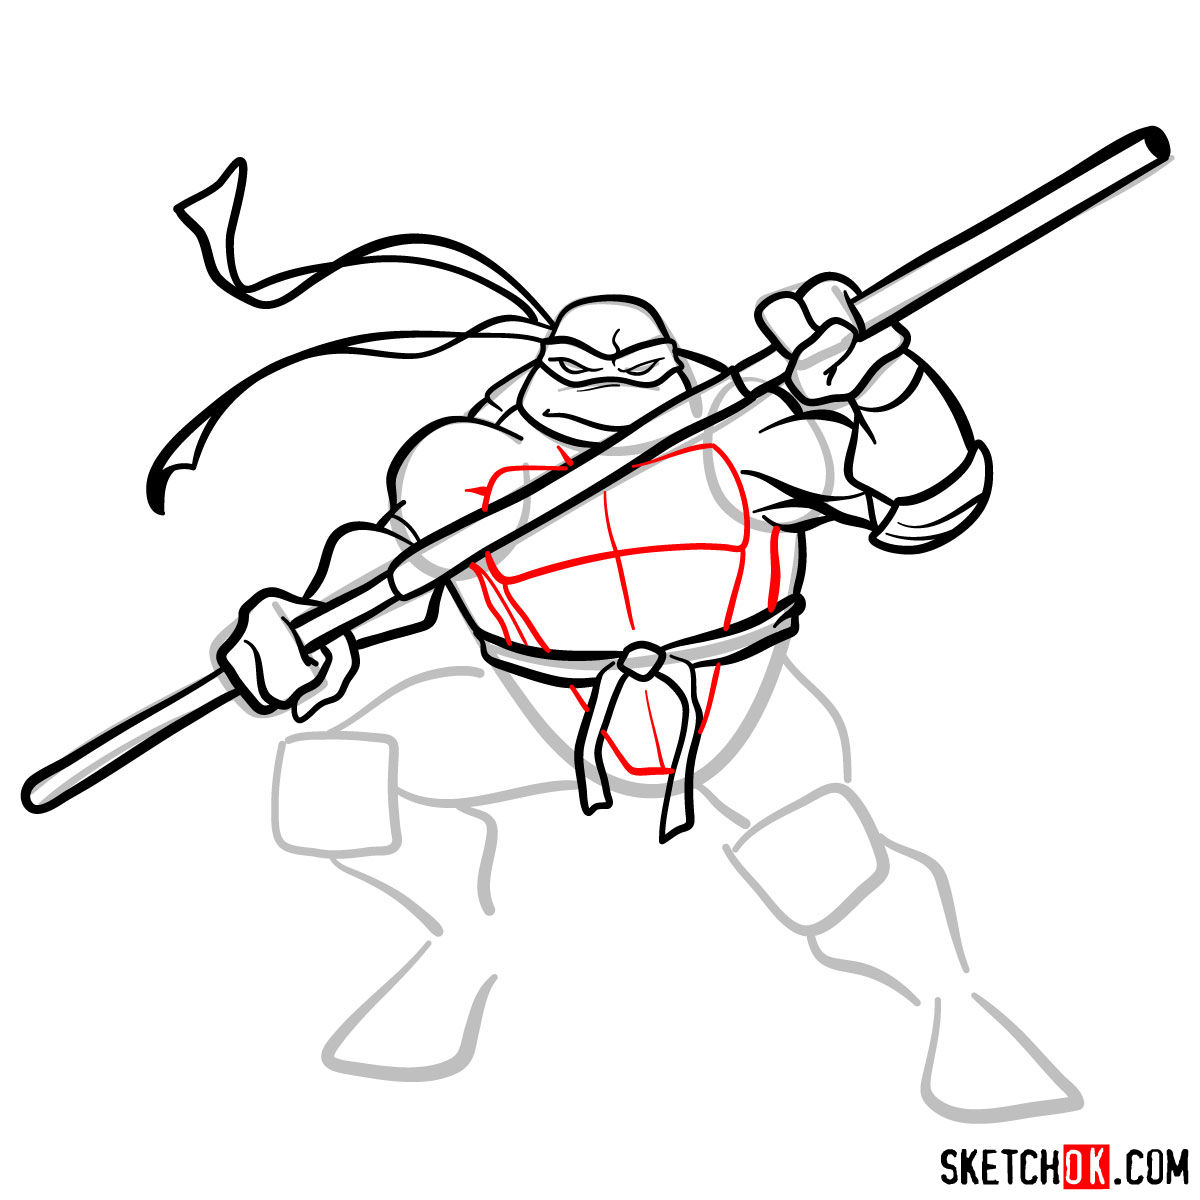 How to draw Donatello ninja turtle - step 10